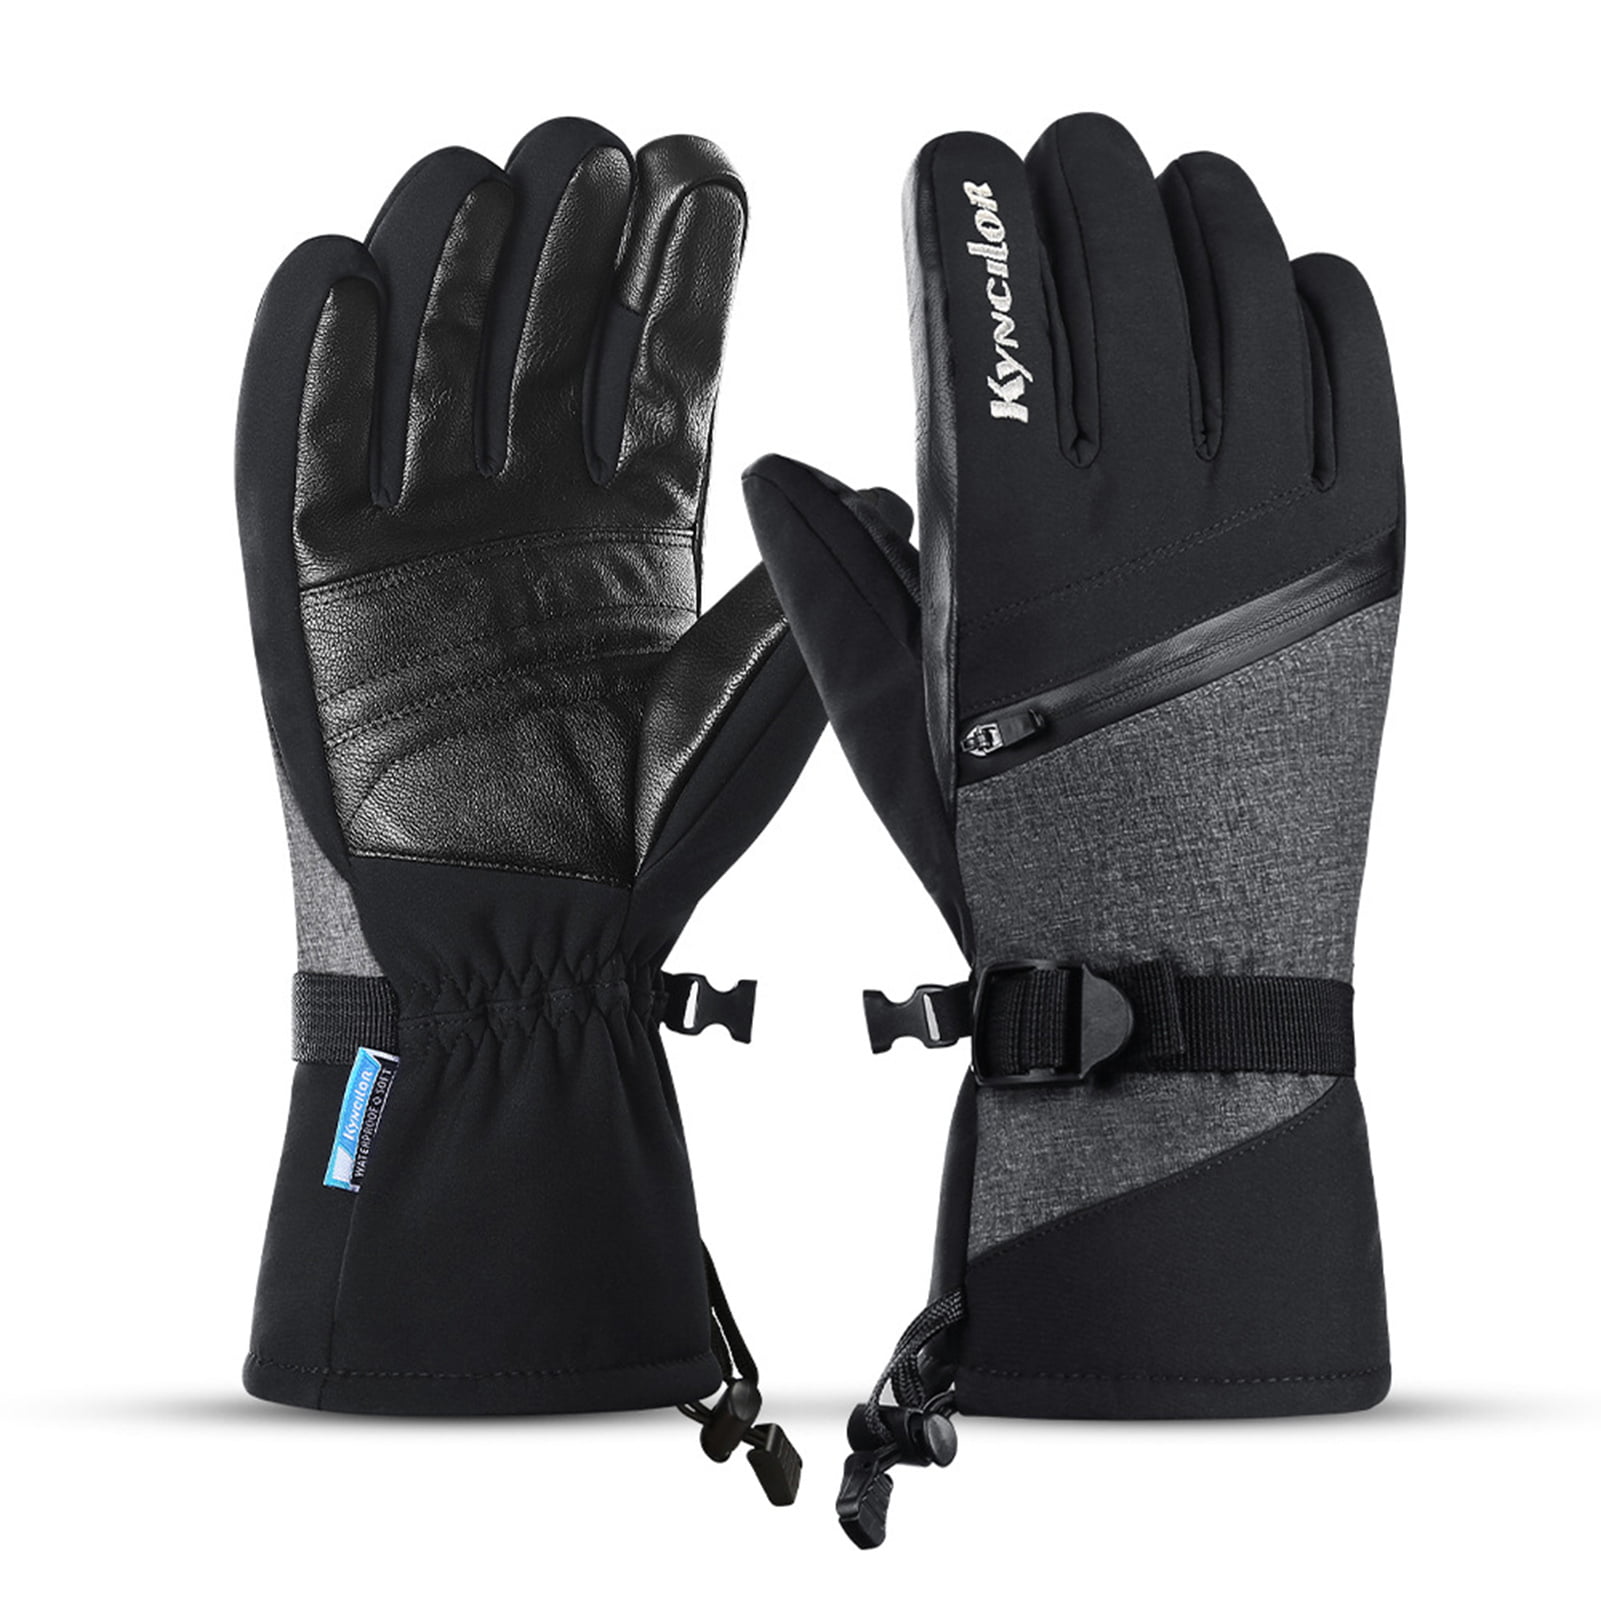 Waterproof Touchscreen Snow Ski Gloves with Hidden Zipper 